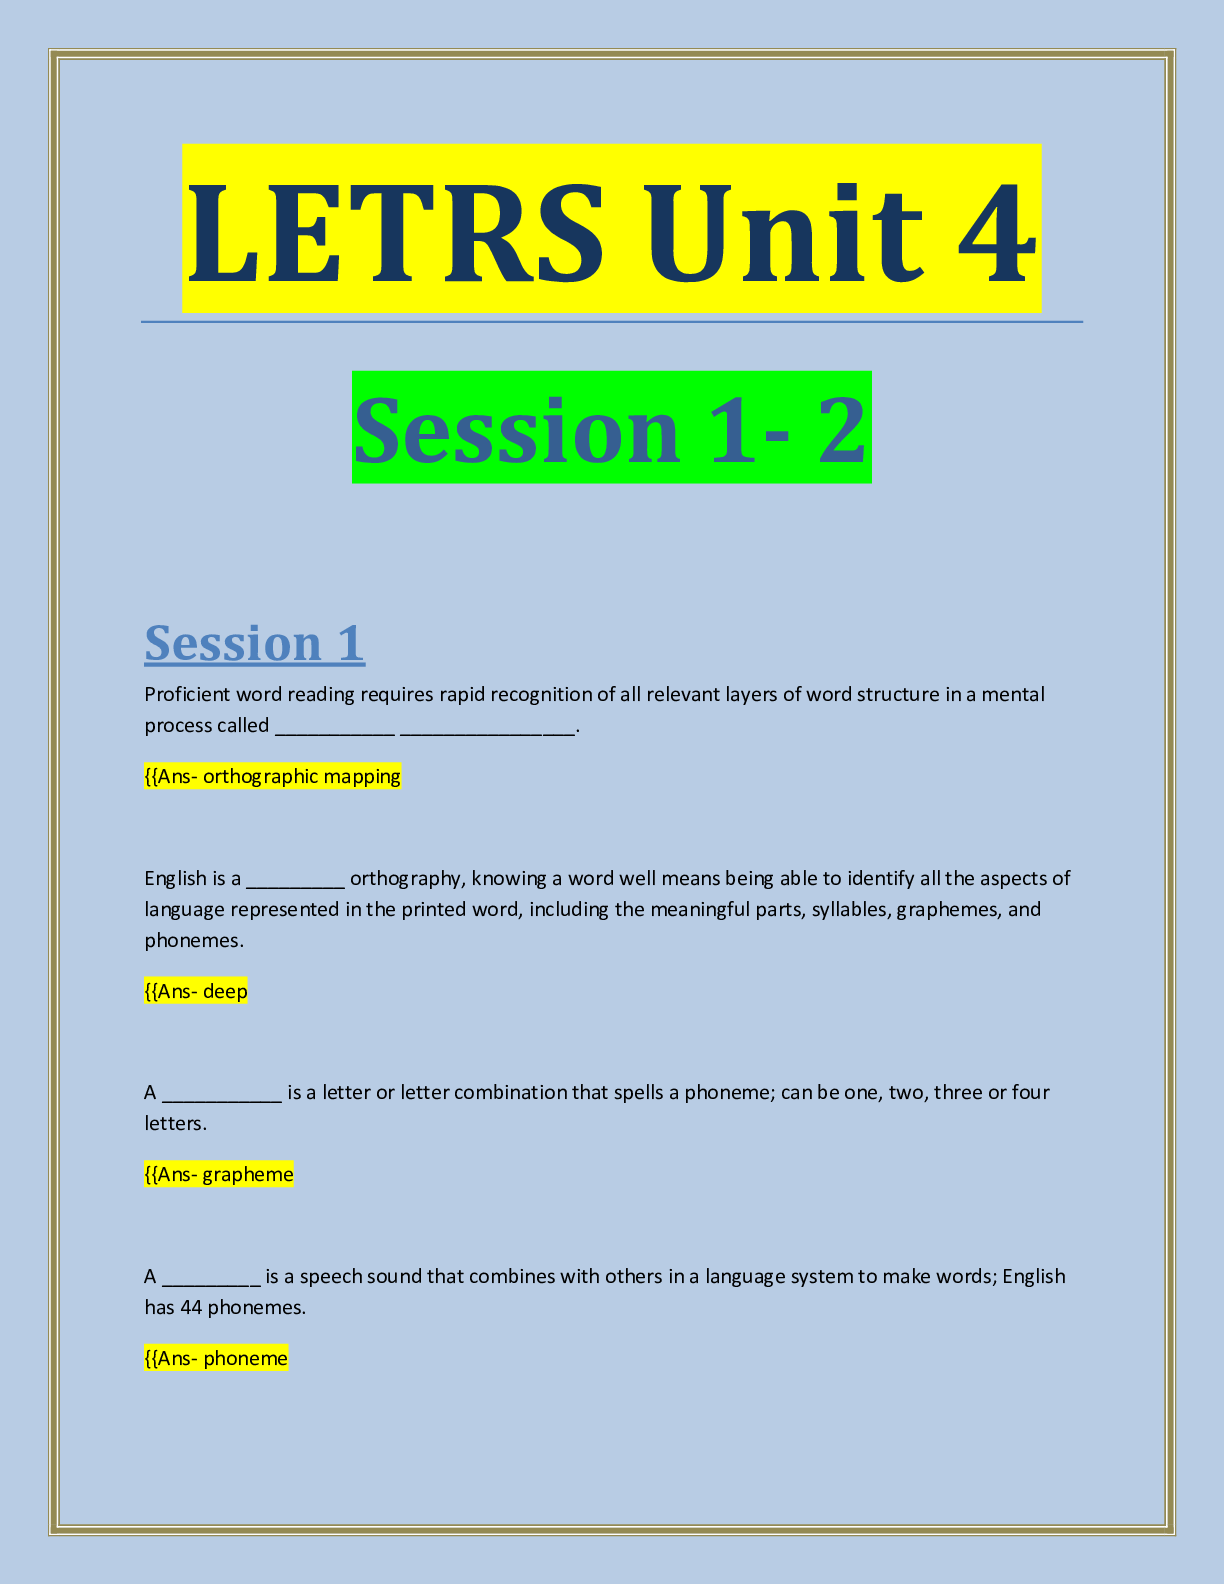 Letrs Unit 5 8 Post Test Answers LETRS Unit 4 - Session 1- 2 | Verified | 100% Correct Answers